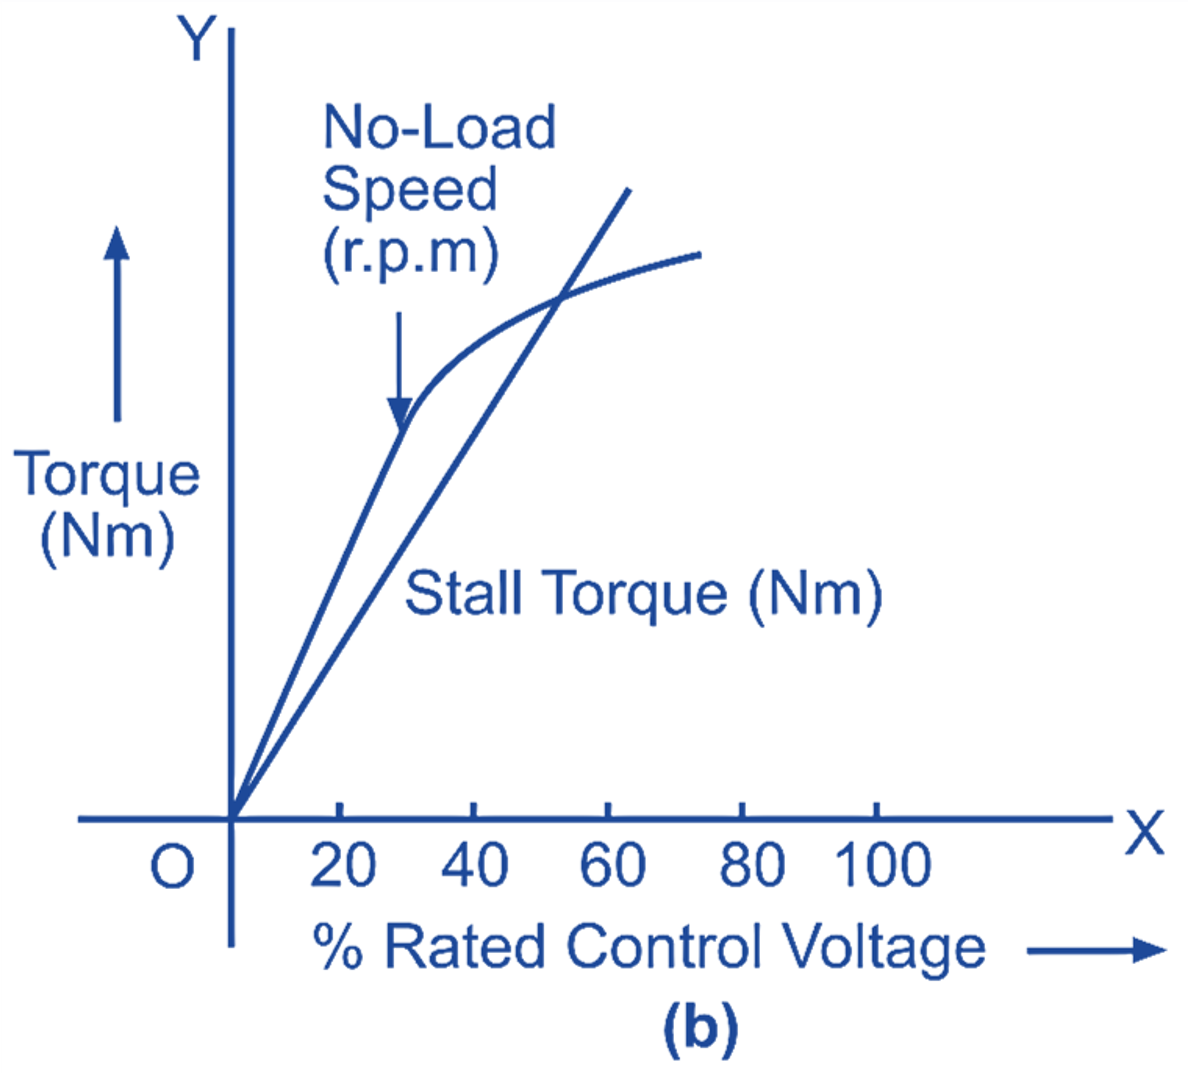 Torque-No load speed characteristics of ac servomotor